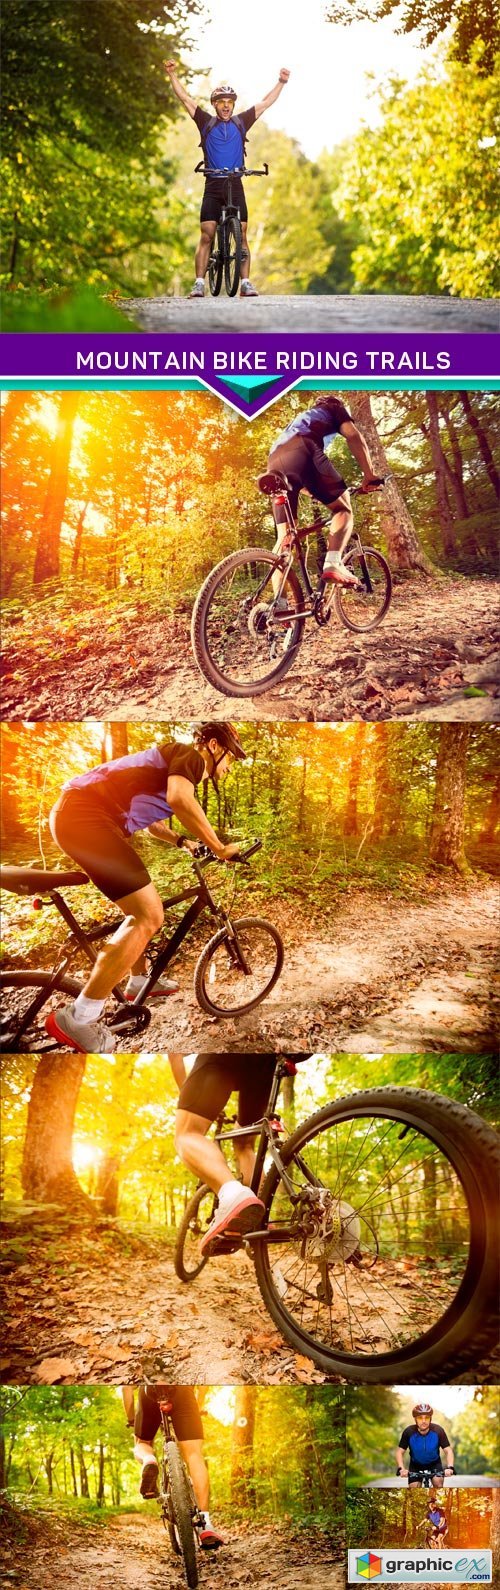 Mountain bike riding trails 7X JPEG